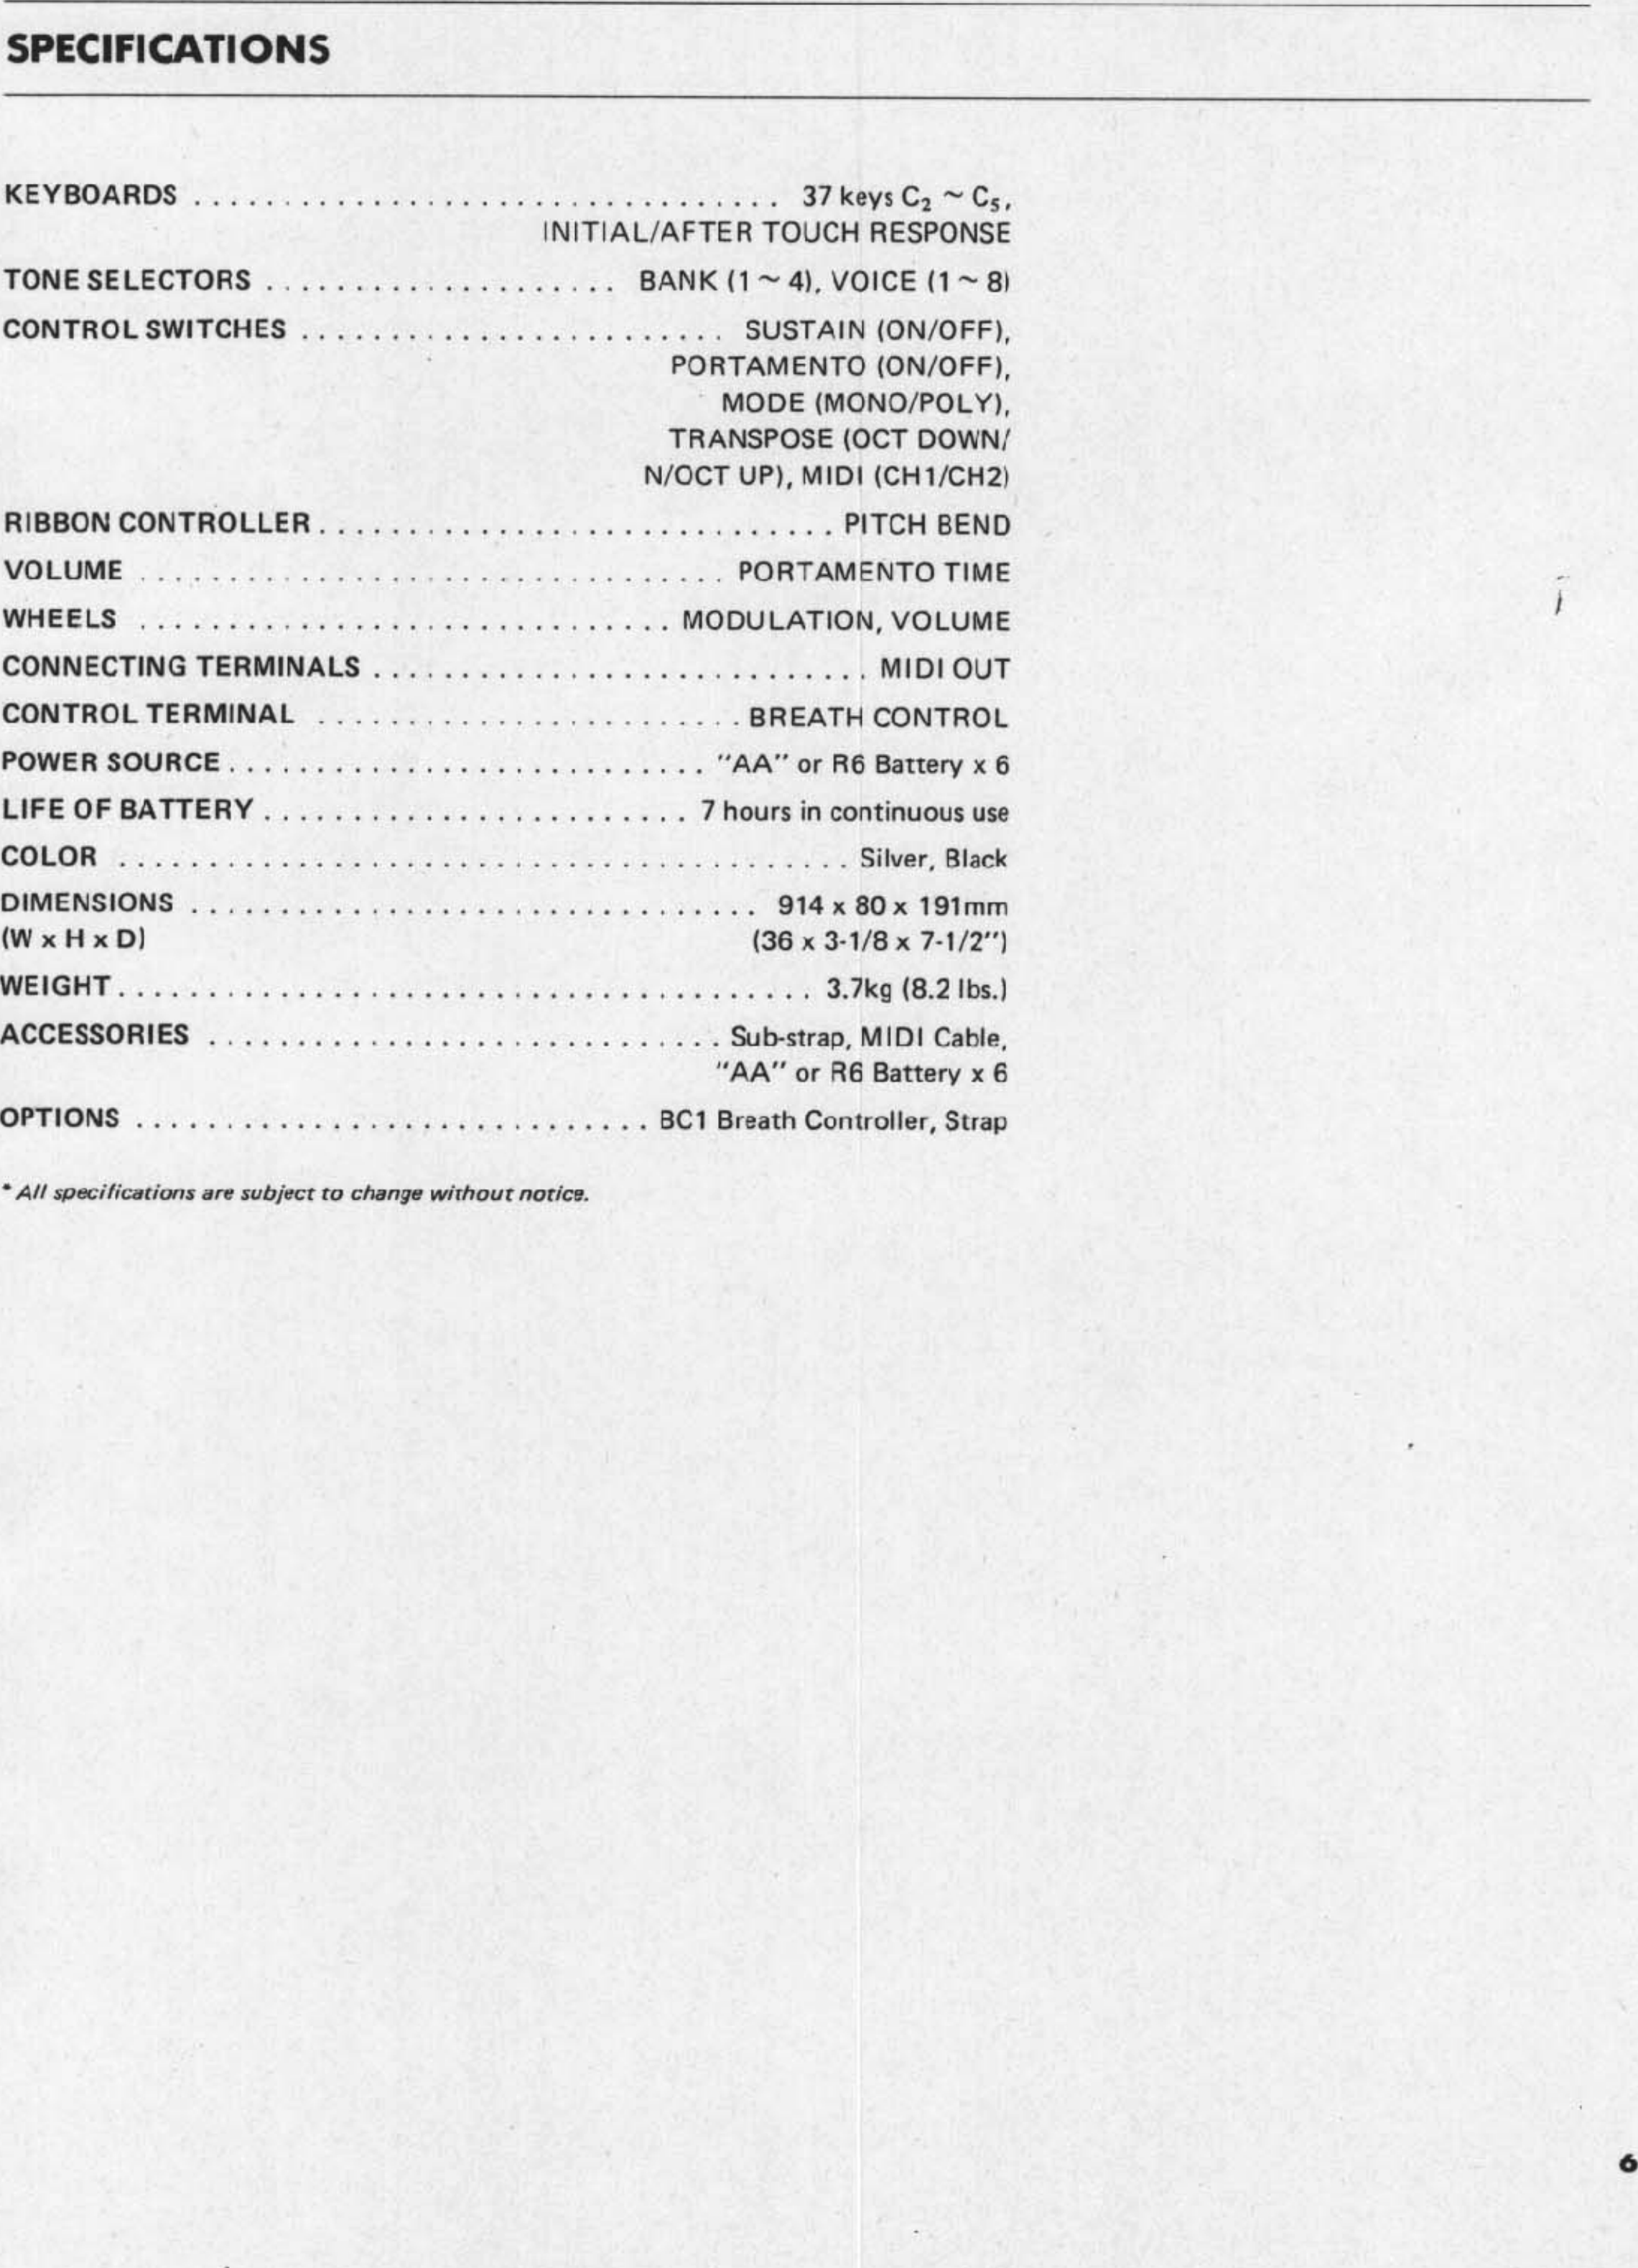 Page 7 of 8 - Yamaha  KX5 Owner's Manual (Image) KX5E